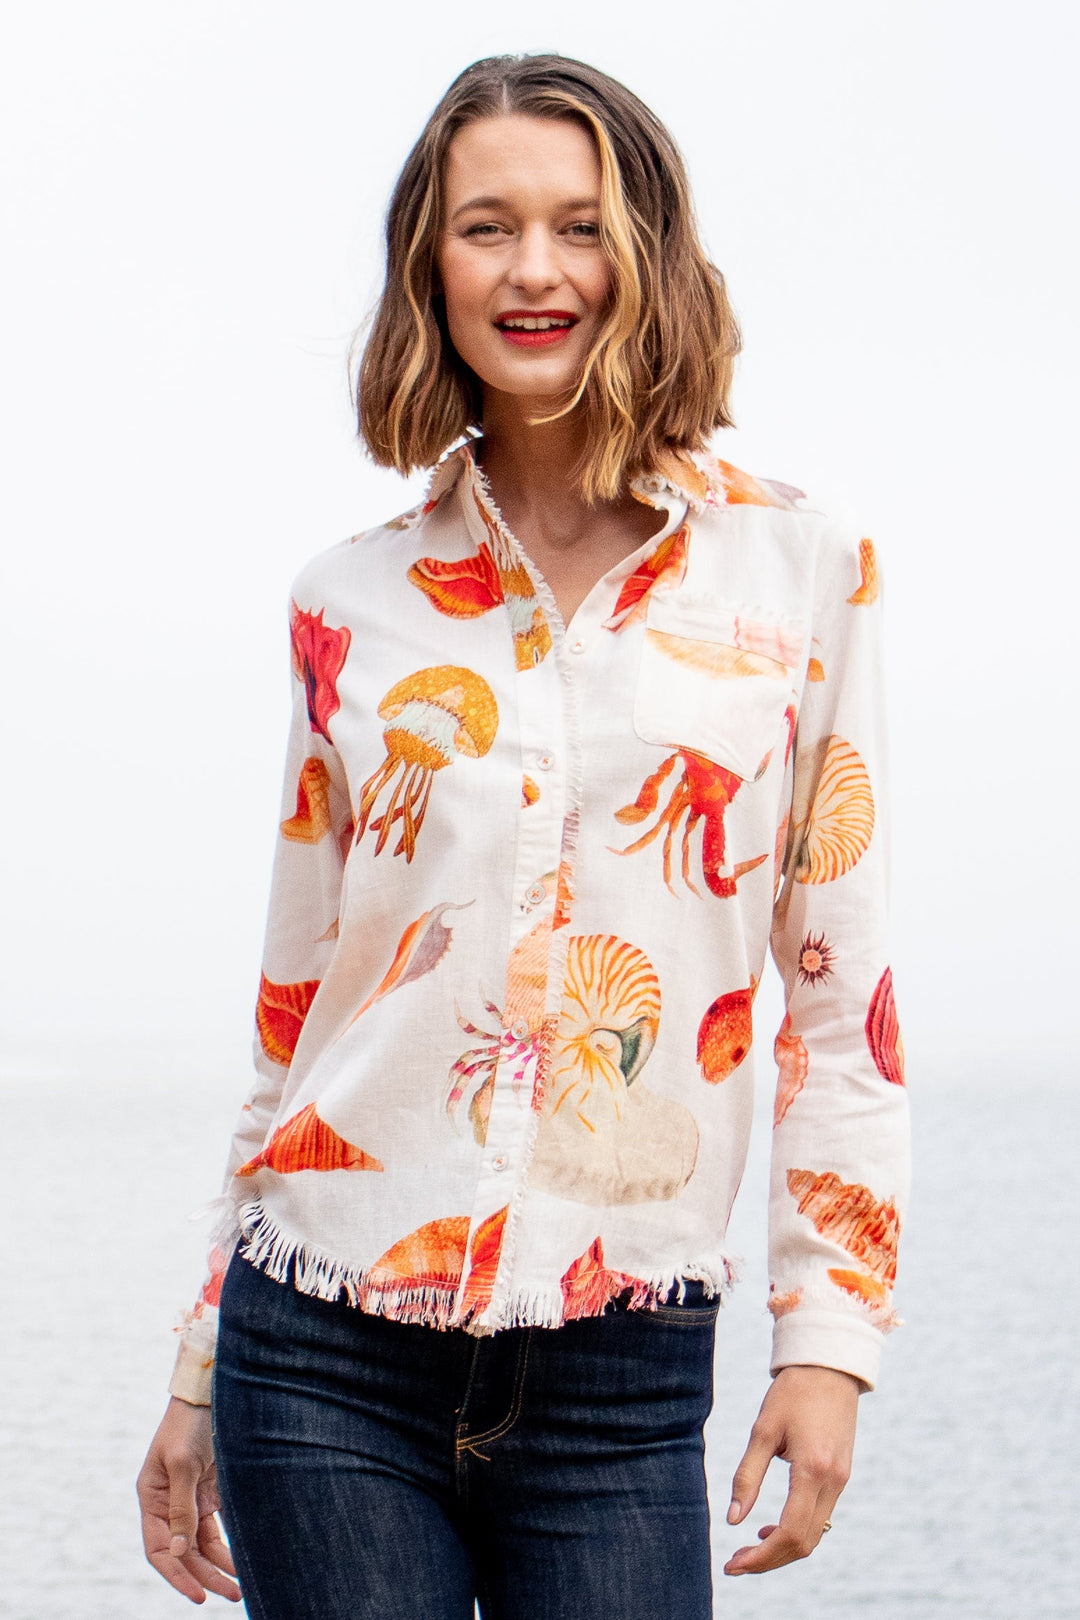 Dizzy-Lizzie Cape Cod Shirt With Sea Life Print